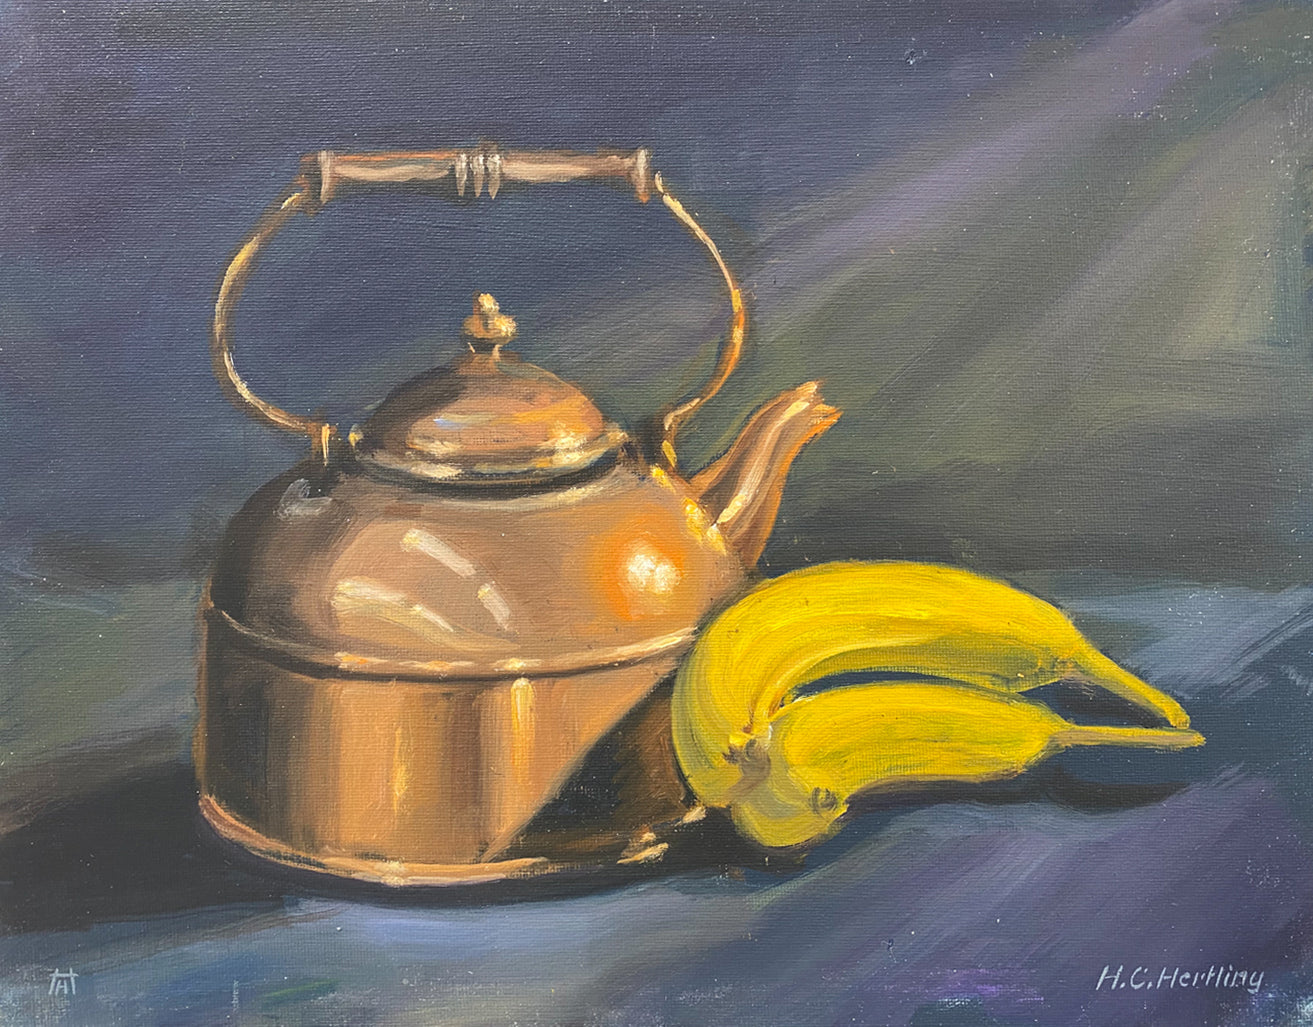 Teapot & Bananas. Still life painting by Heiner Hertling.  Oil on board.  